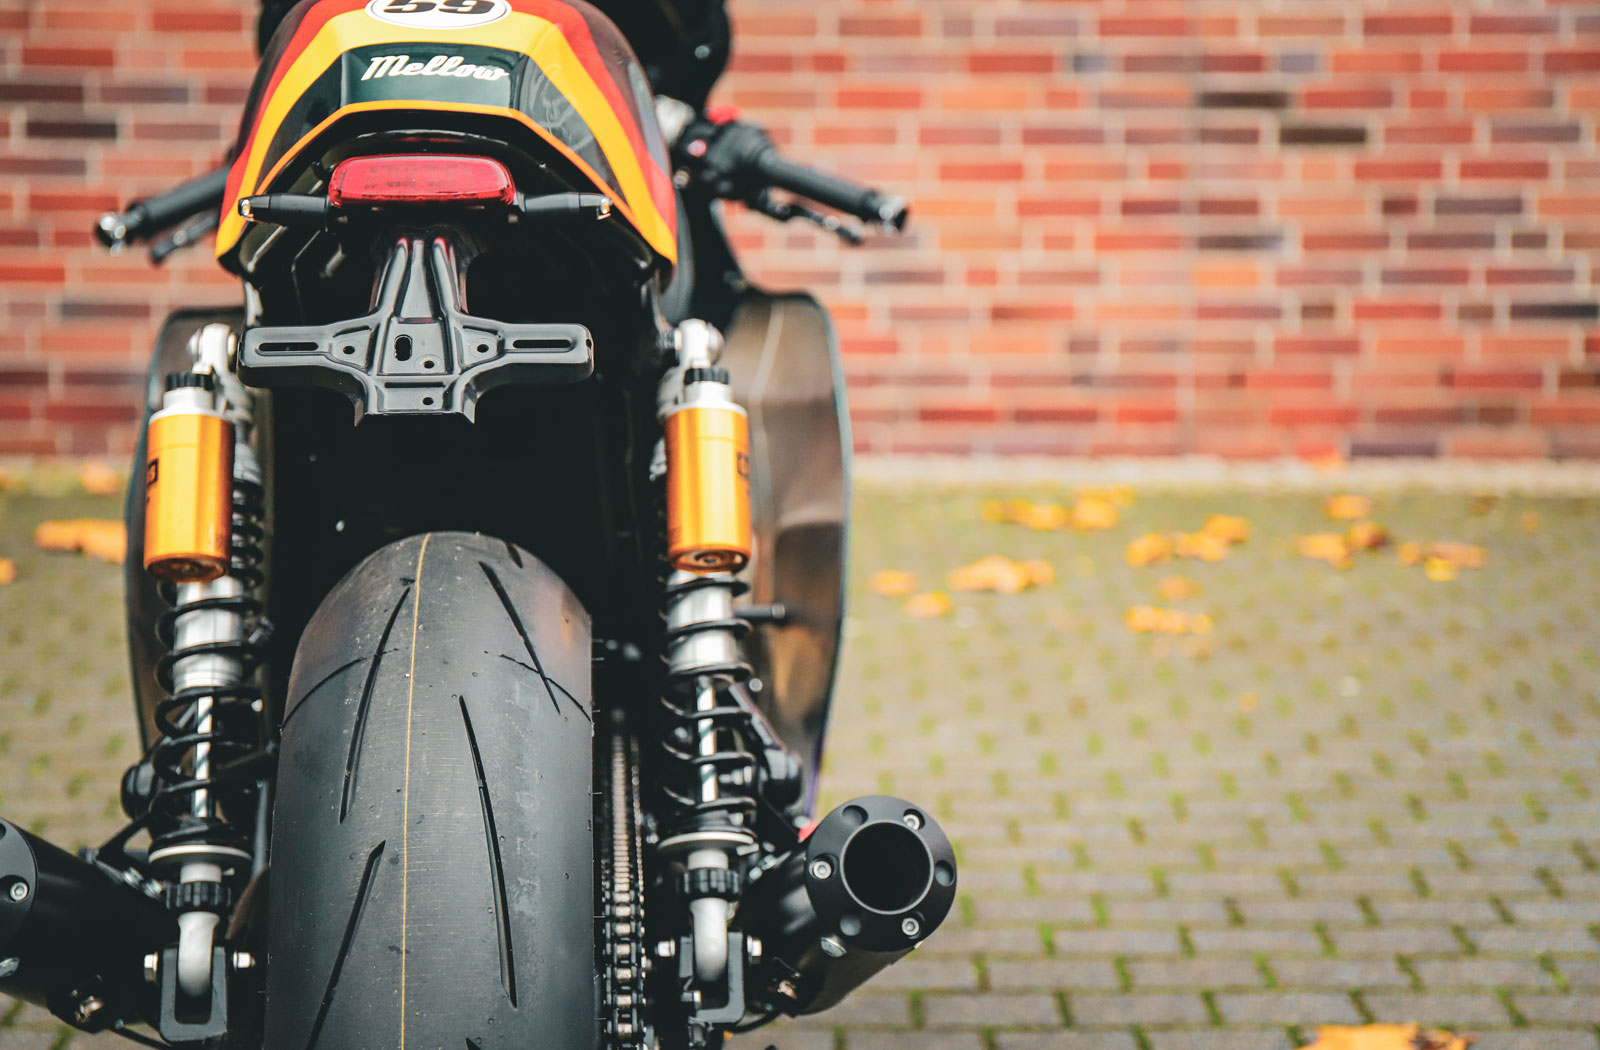 Mellow Motorcycles 'Bellydancer' Triumph Thruxton